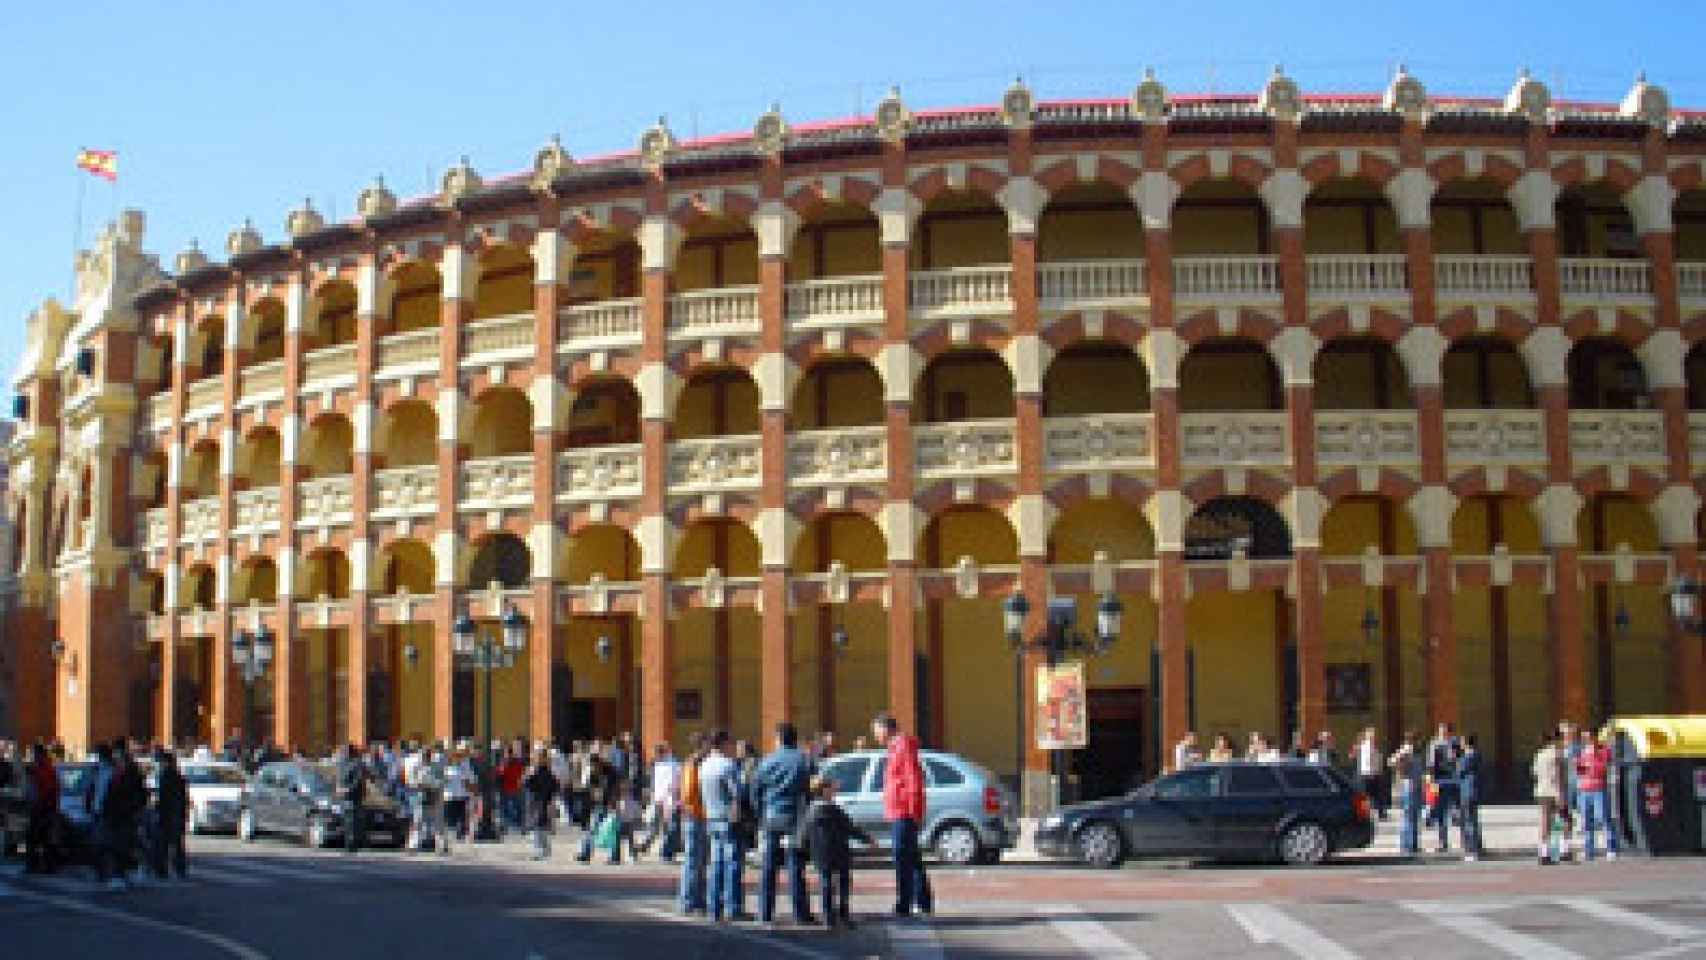 Plaza de Toros de Zaragoza